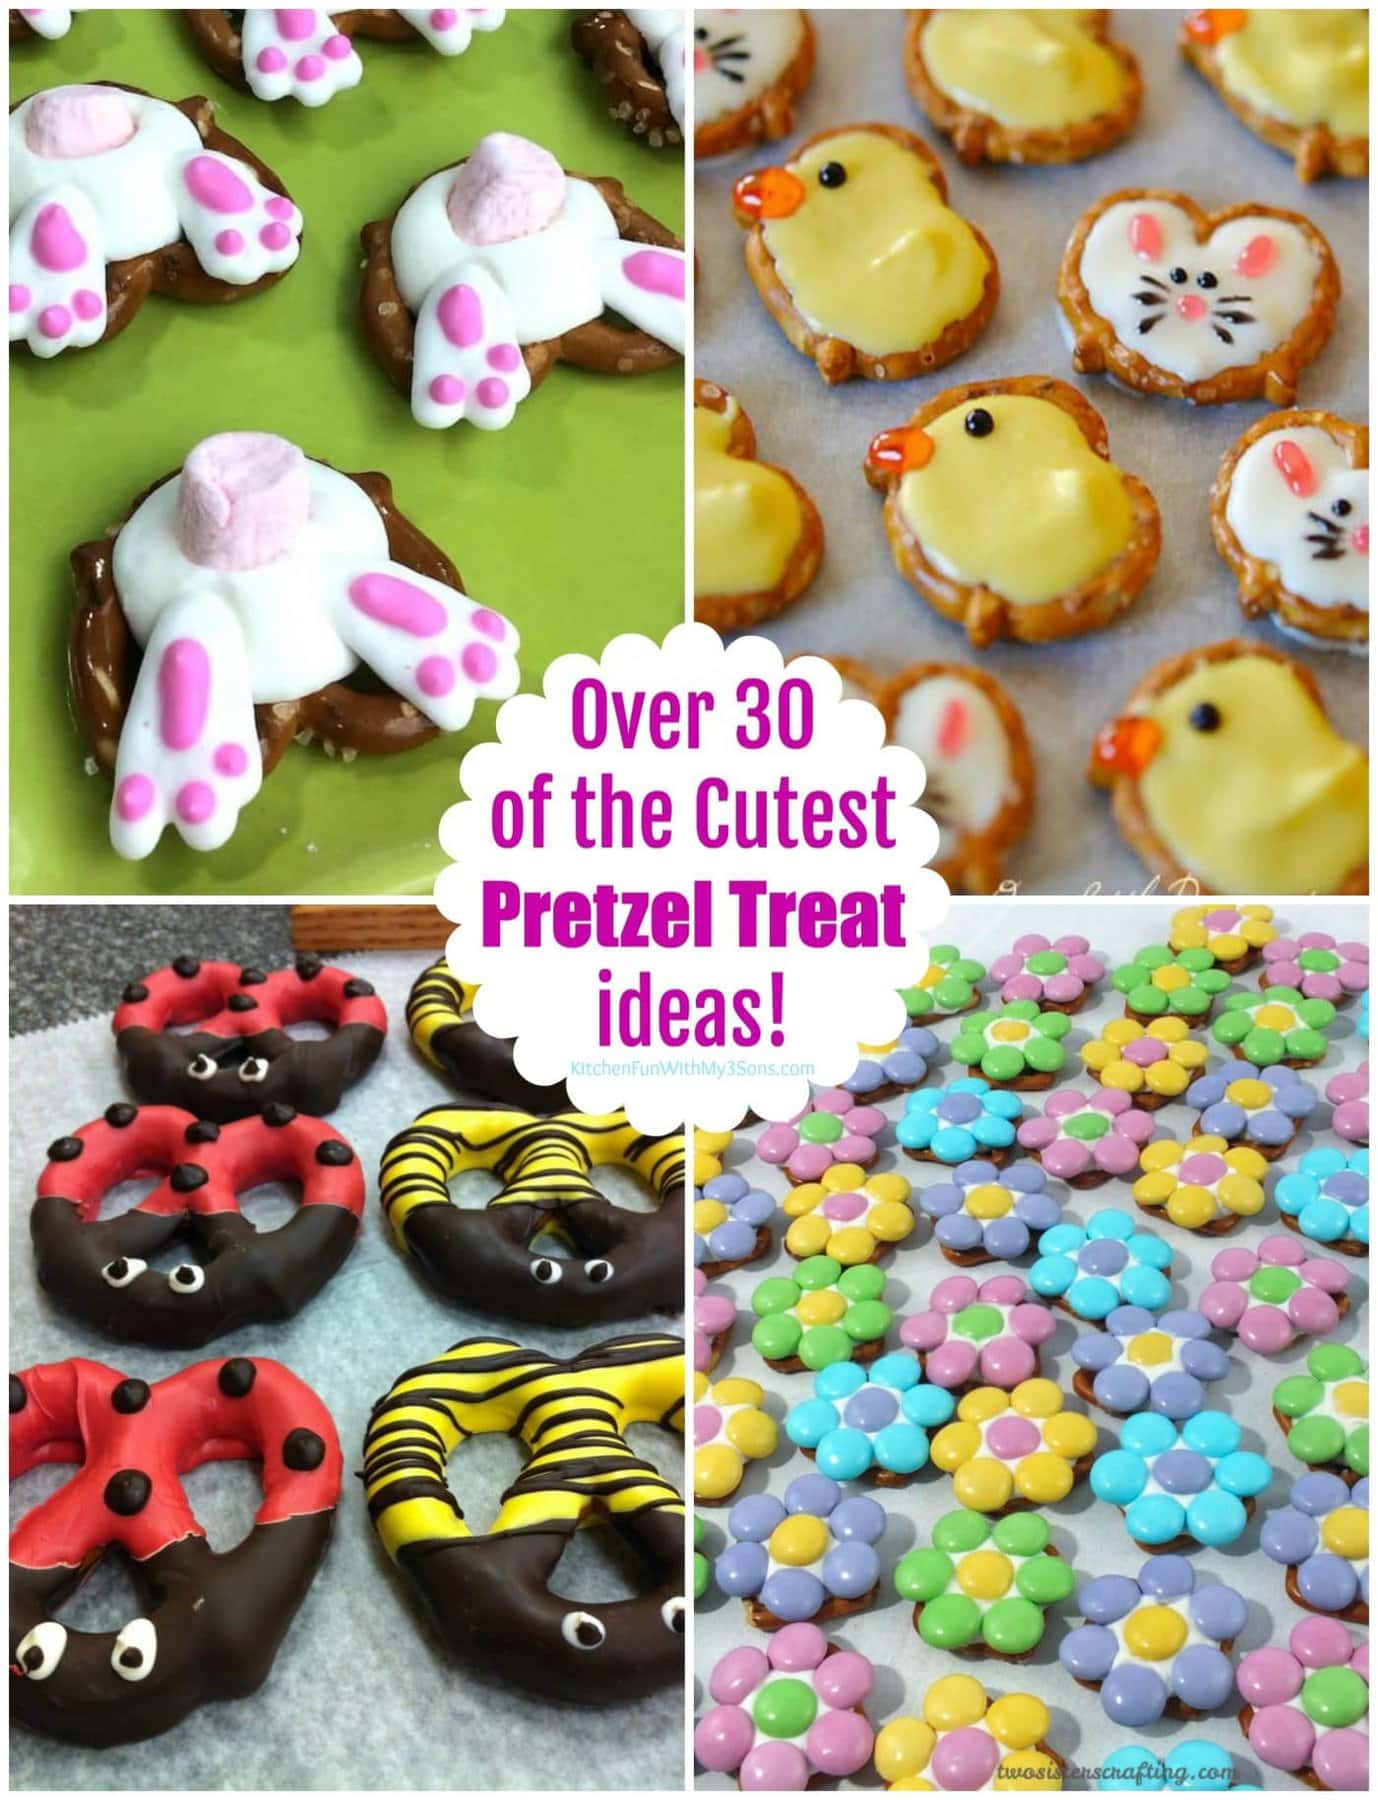 Over 30 of the Cutest Pretzel Treat ideas!